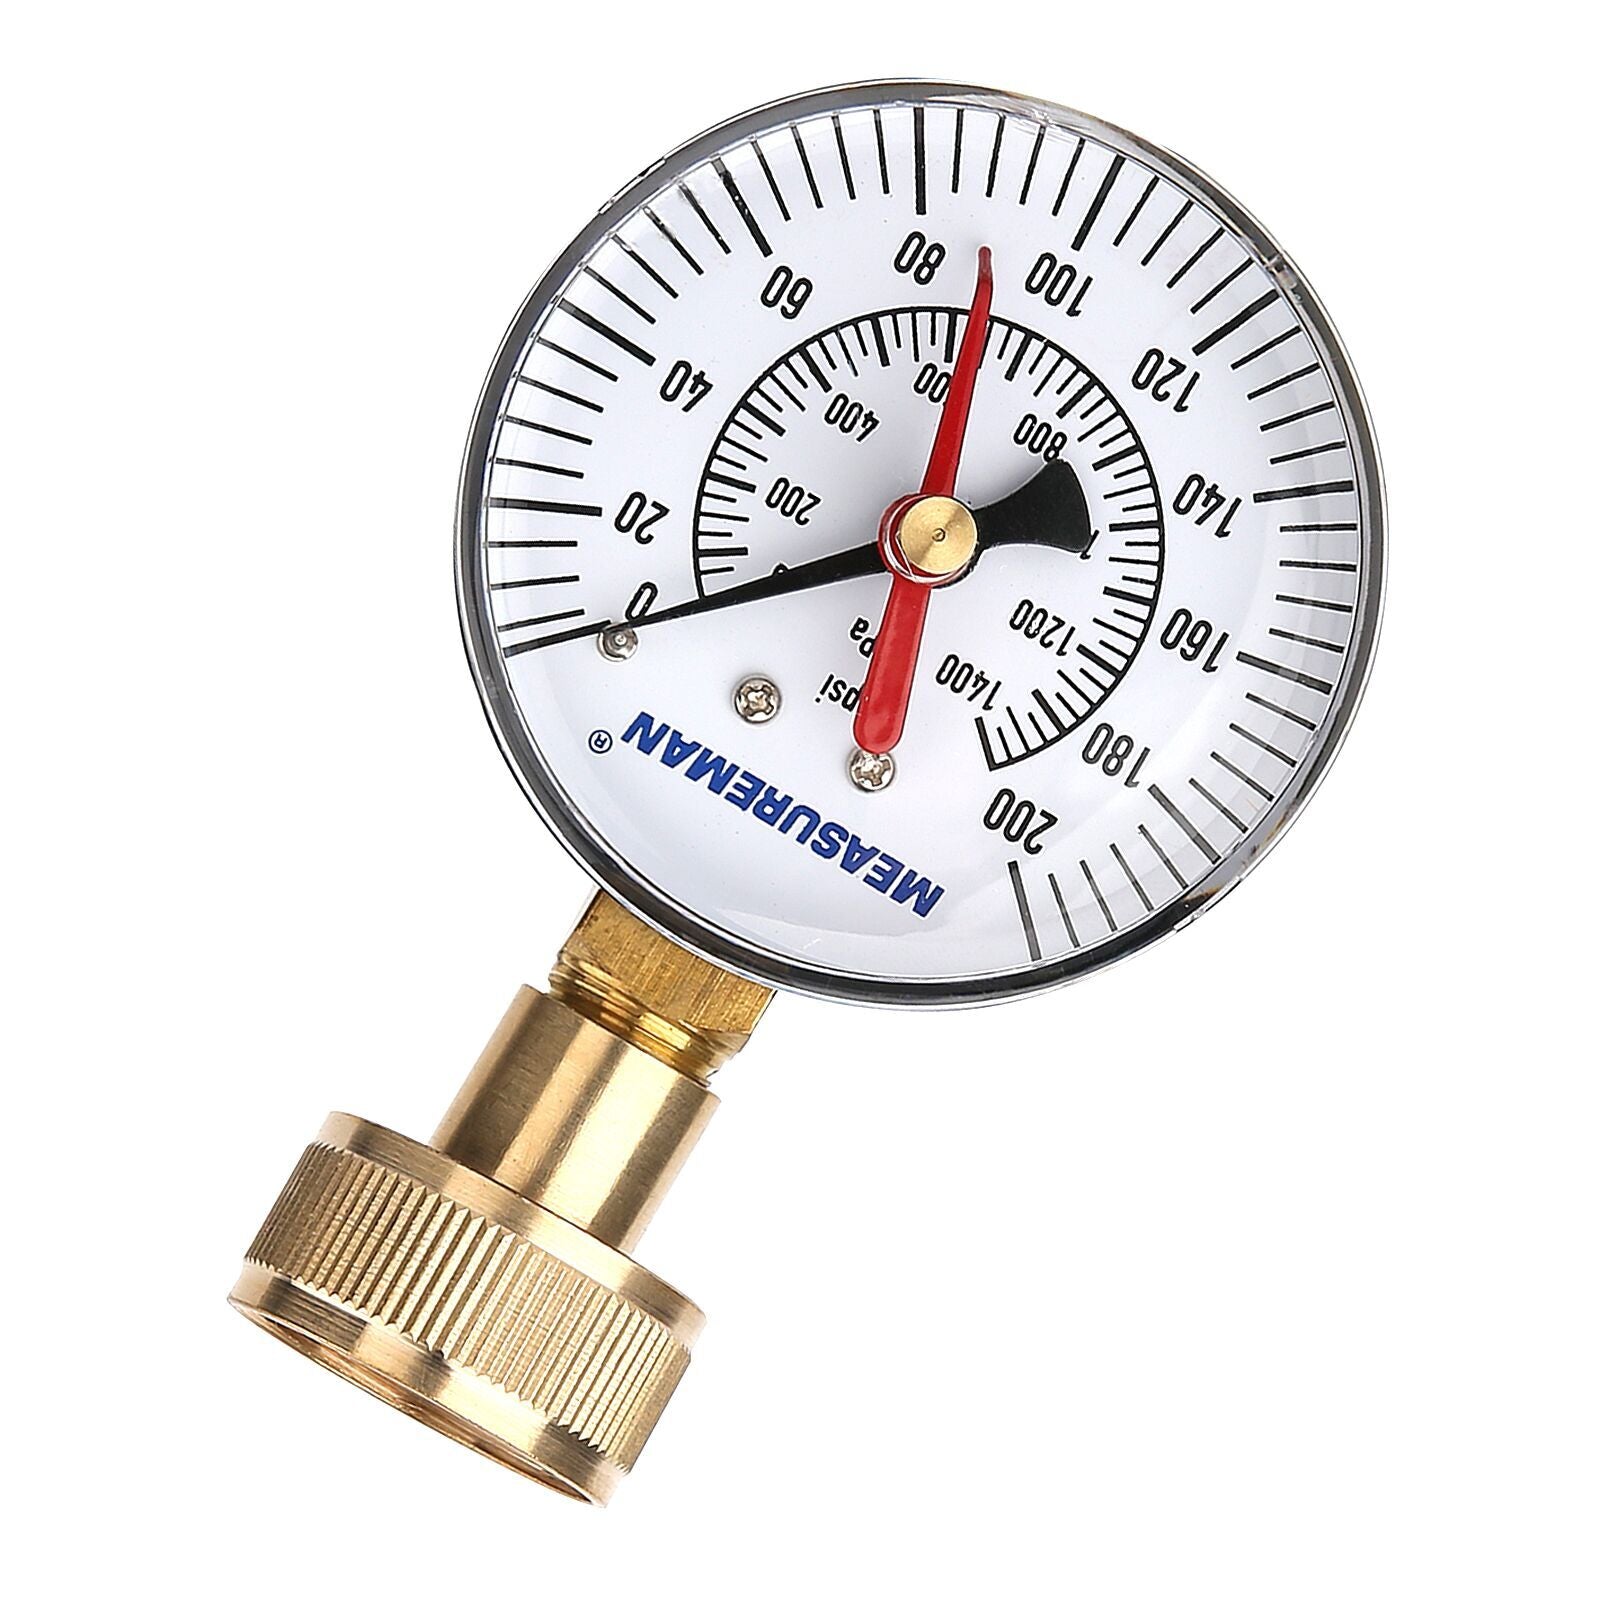 Pressure Test Products - Pressure Gauge - 1MPa